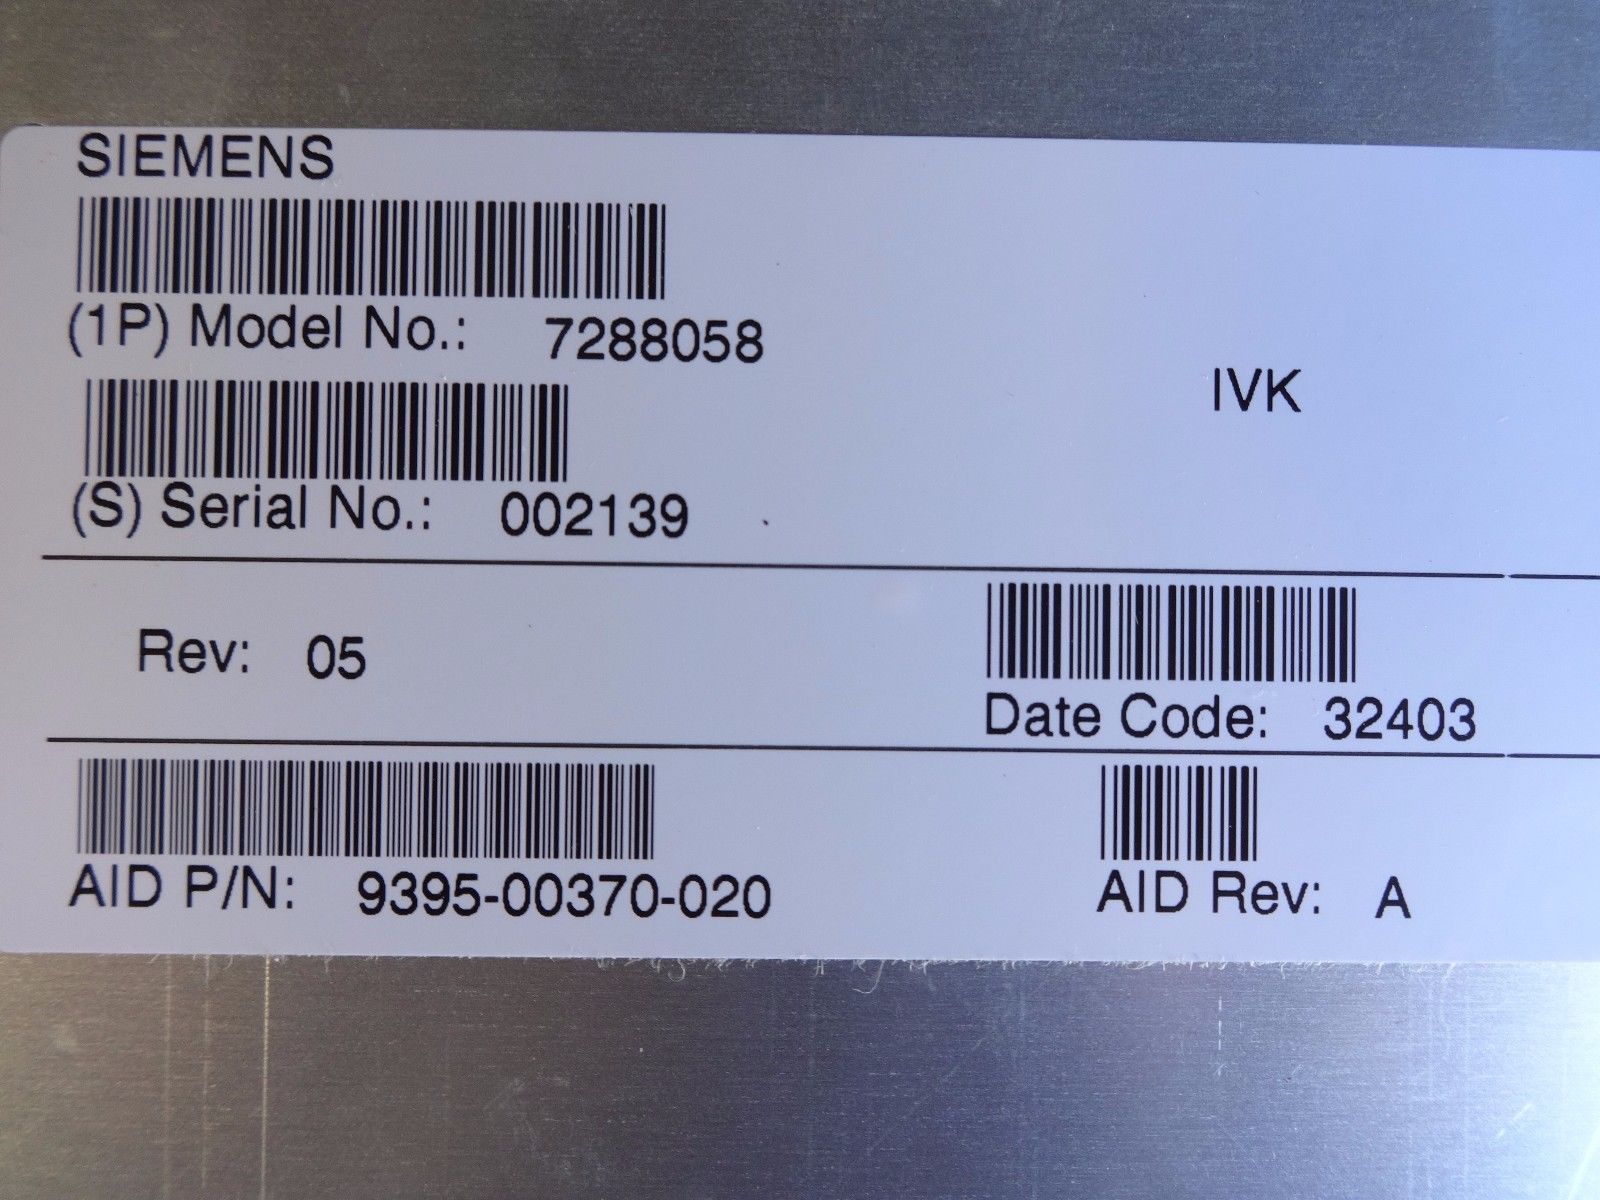 Siemens Sonoline Antares Ultrasound 7288058 KEYBOARD DIAGNOSTIC ULTRASOUND MACHINES FOR SALE